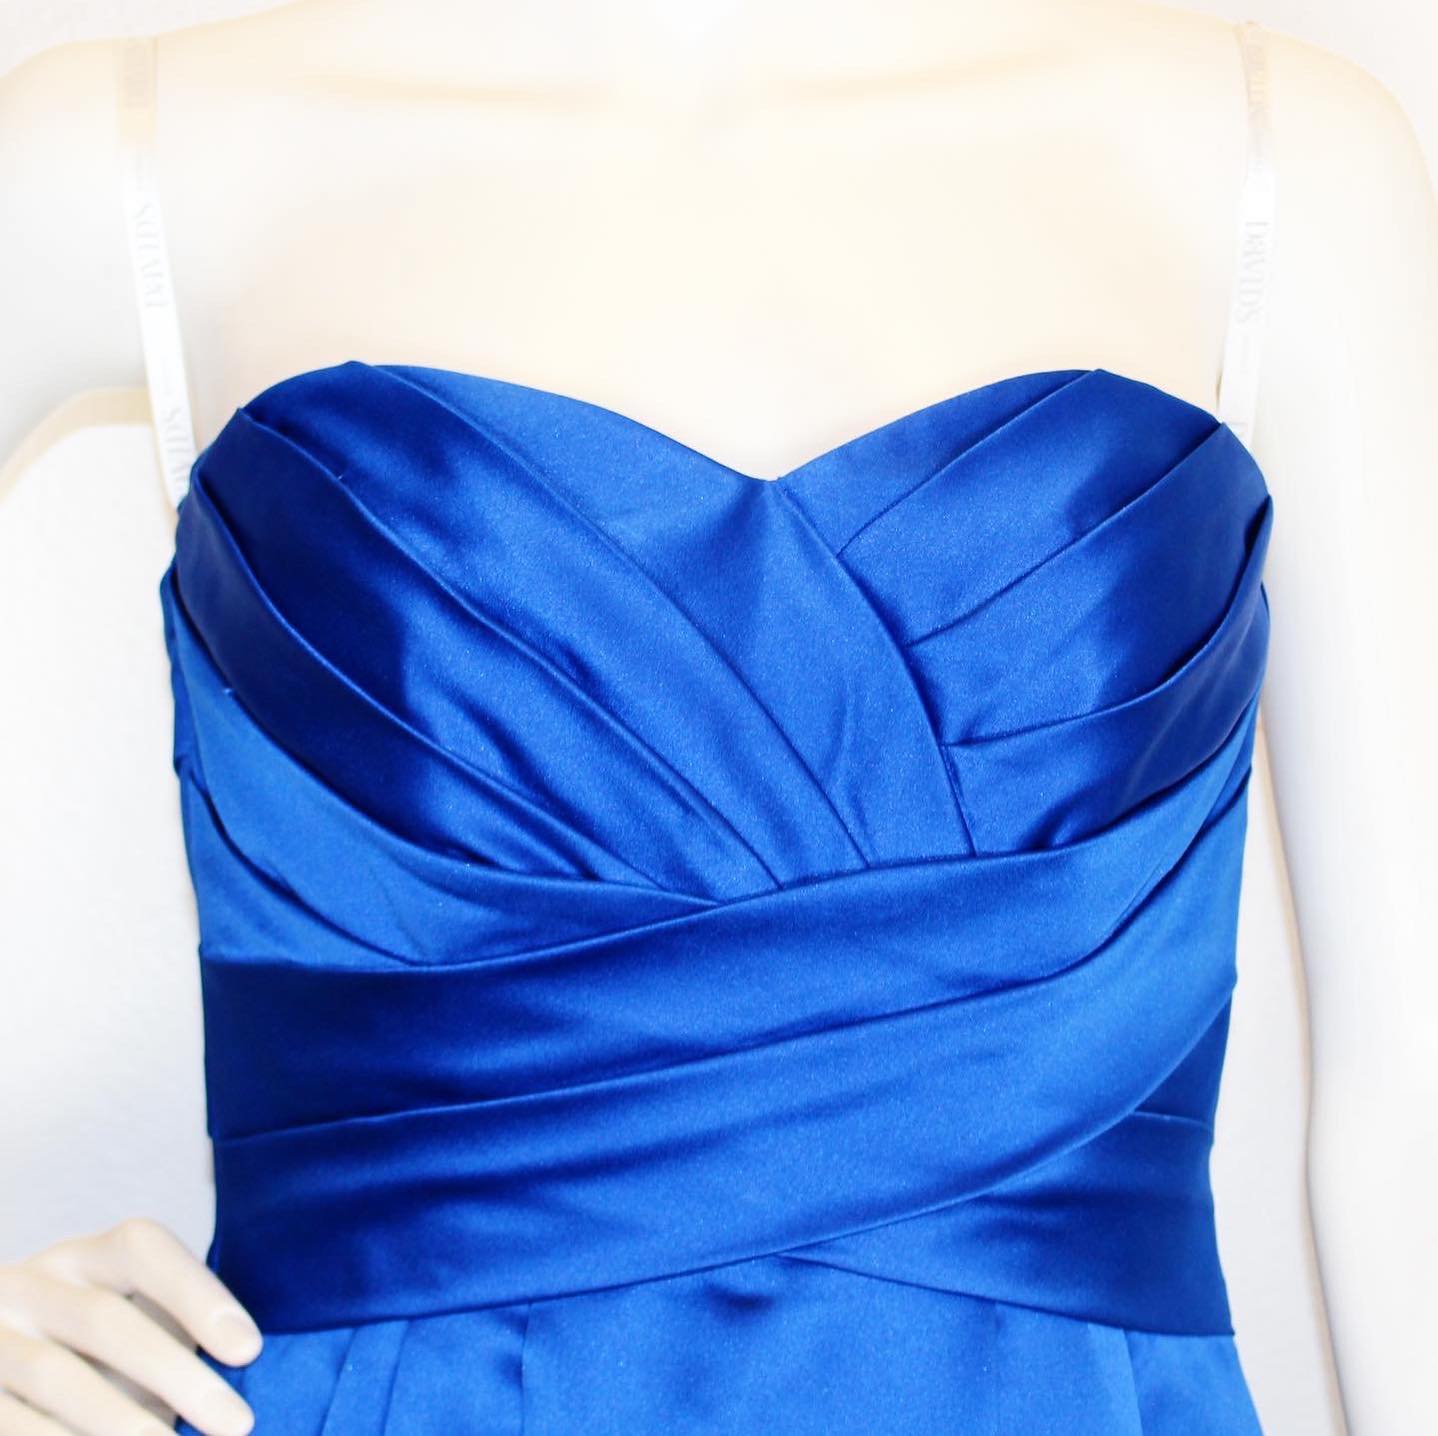 DAVIDS BRIDAL 41524 Royal Blue Strapless Formal Dress Size 2 3